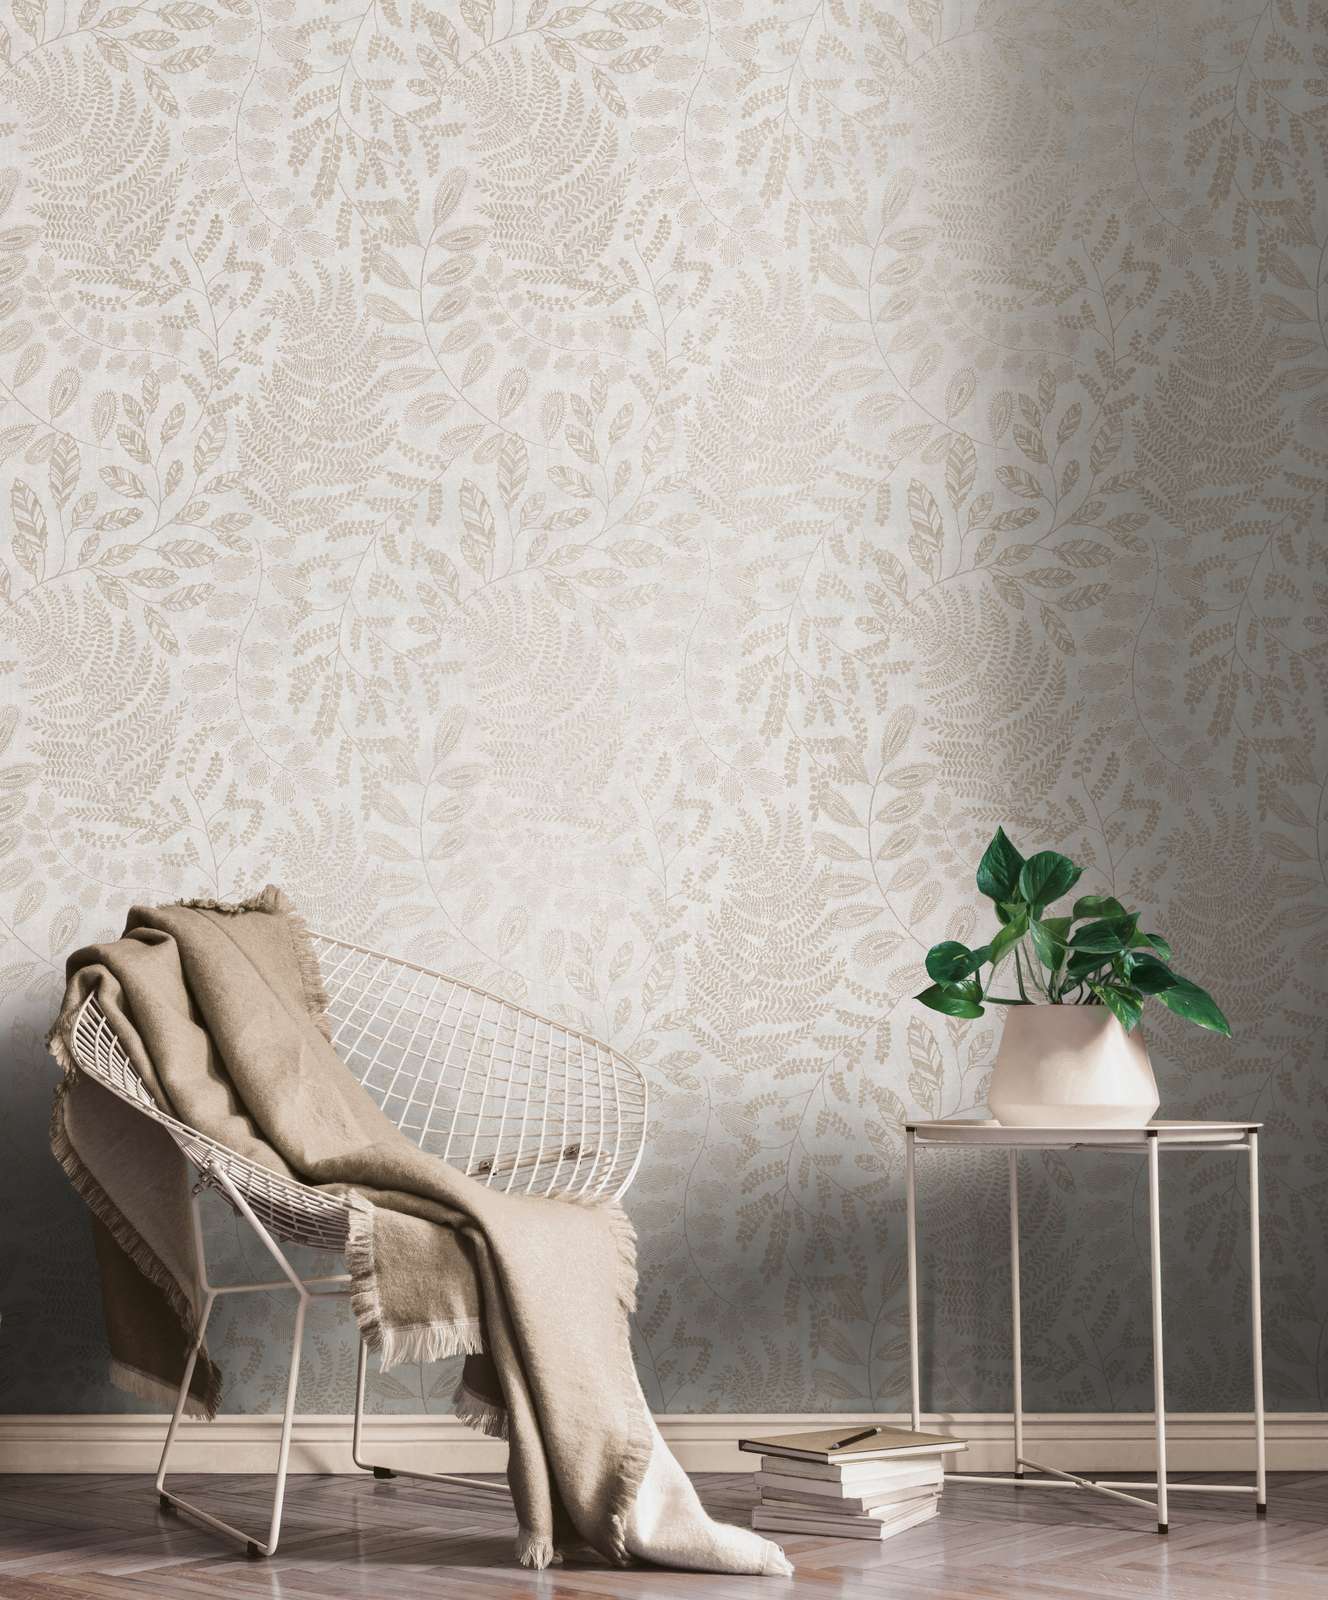             Wallpaper leaves design in boho style - beige, metallic
        